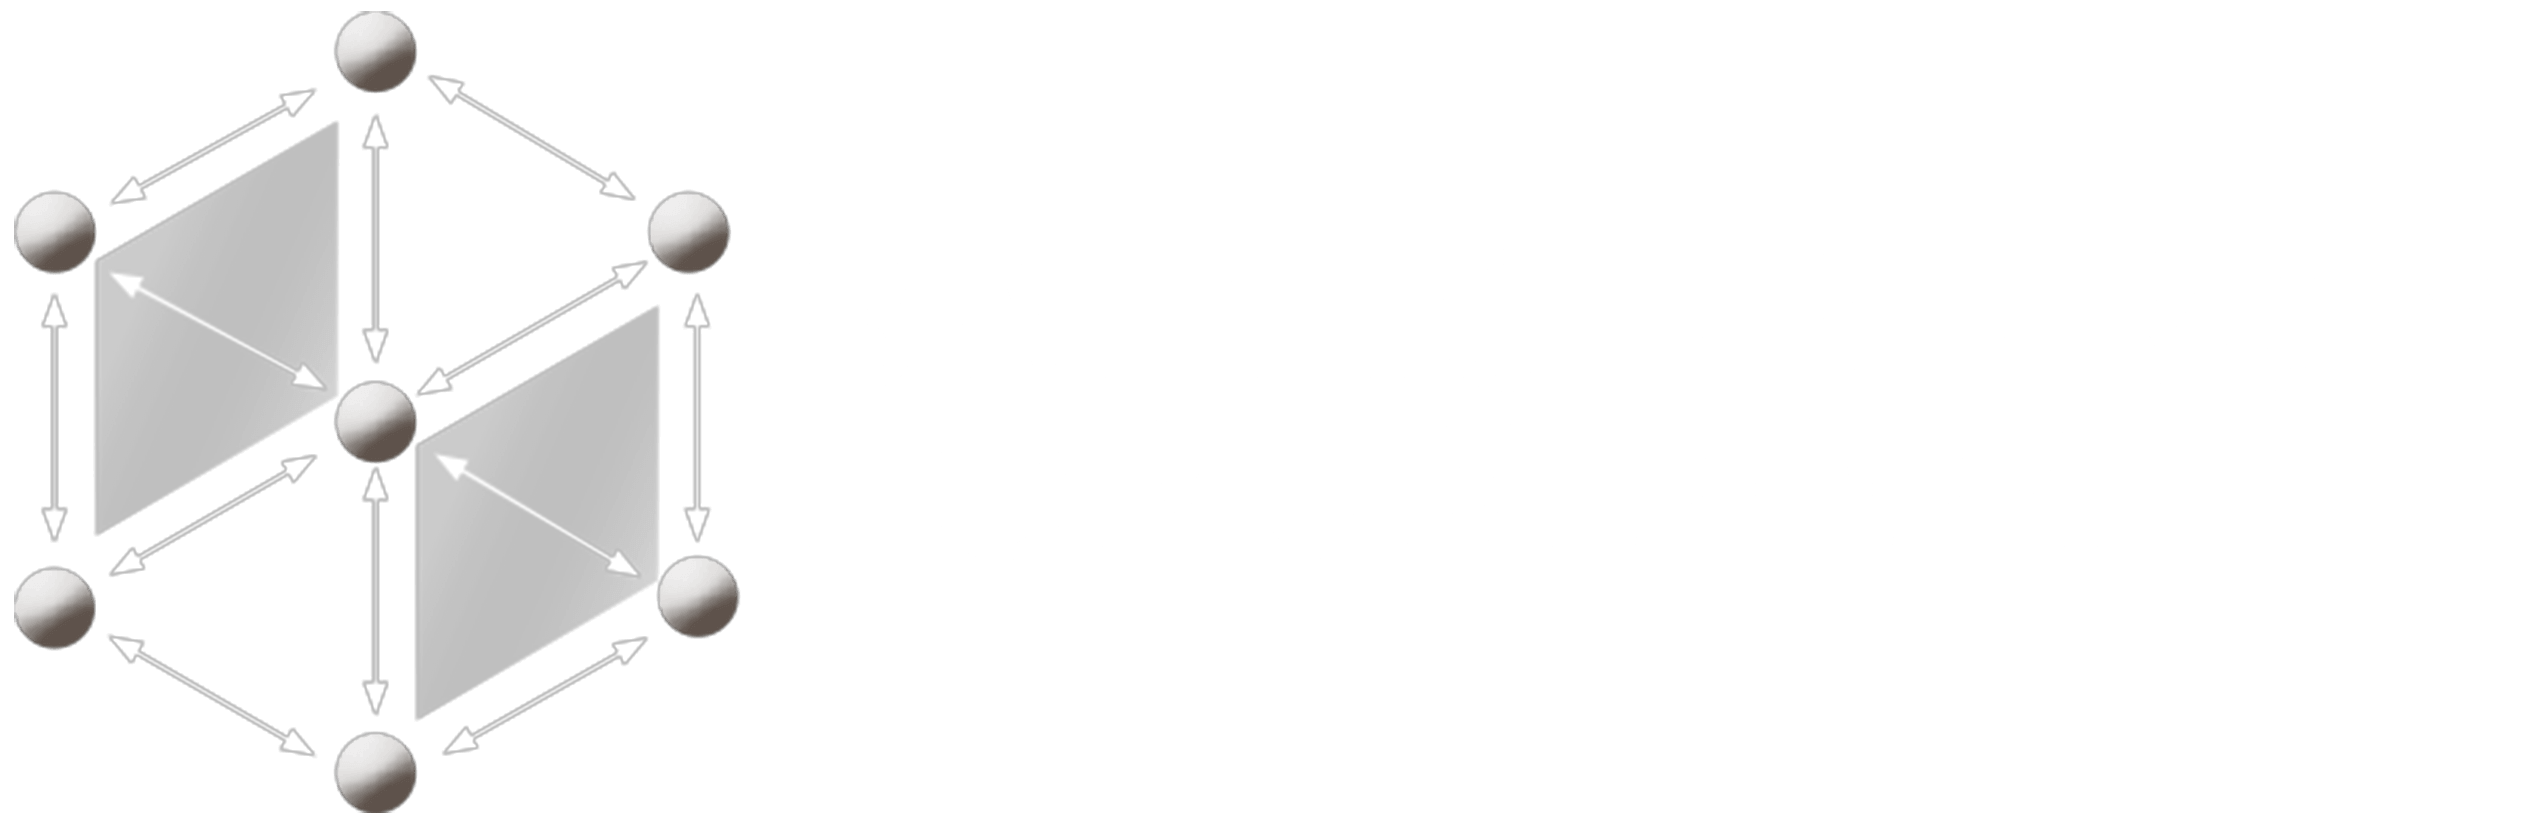 Baltic energy forum 2024